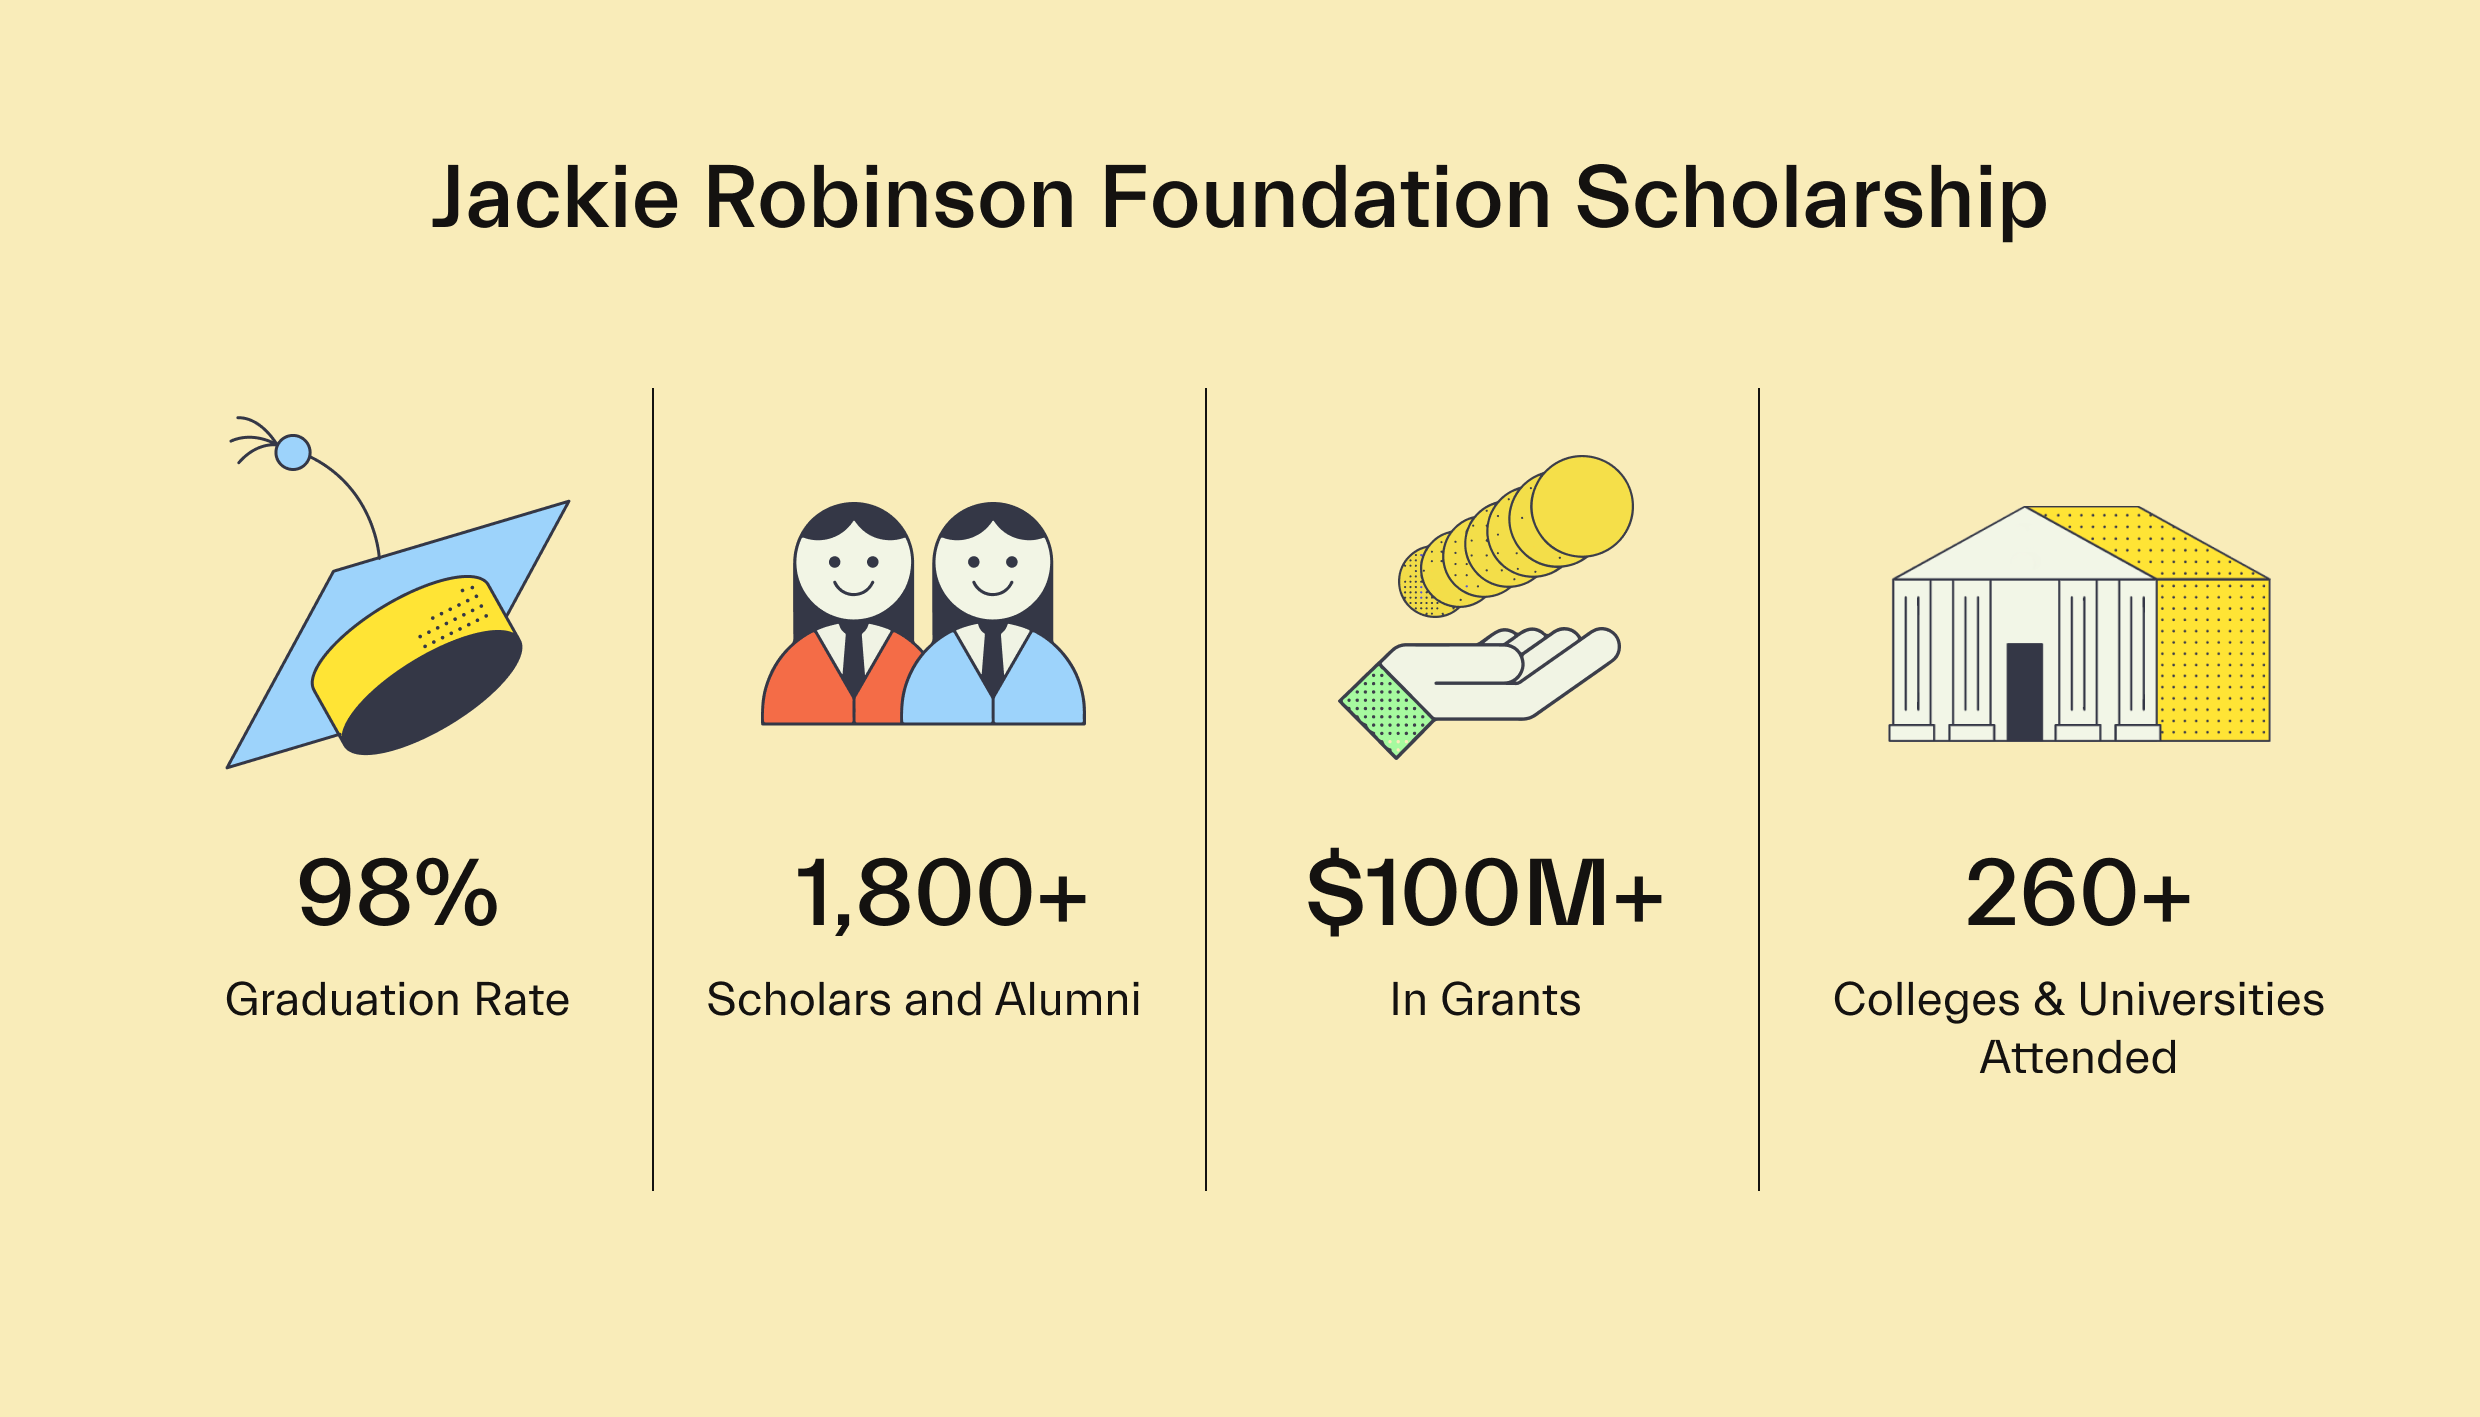 Jackie Robinson Foundation Scholarship Statistics